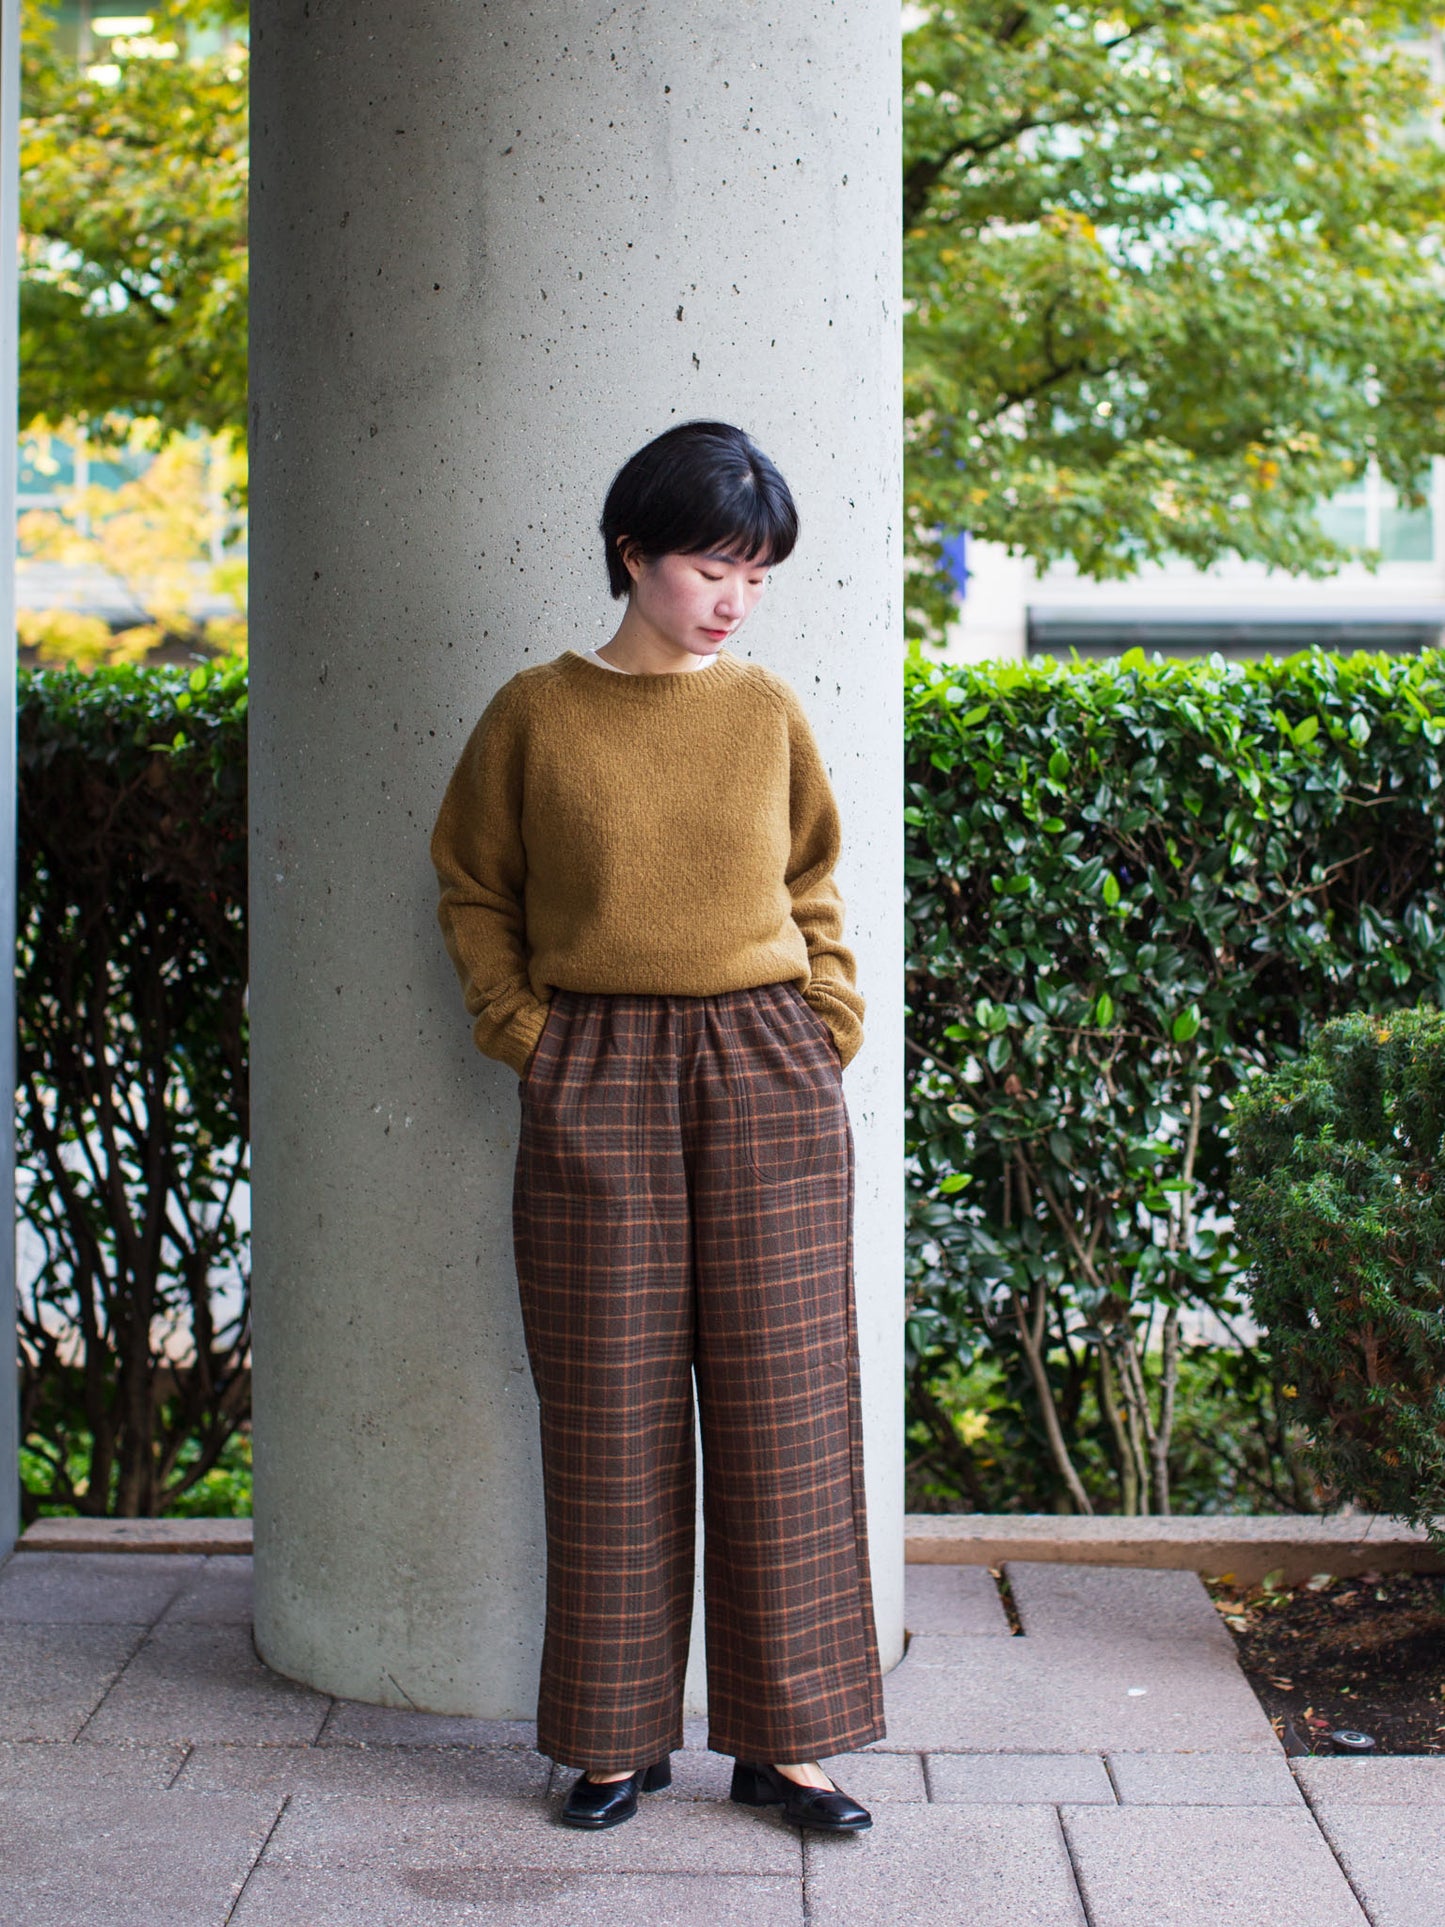 [50% off] Danton Woman's Wool Straight Easy Pants - Orange x Green Checks